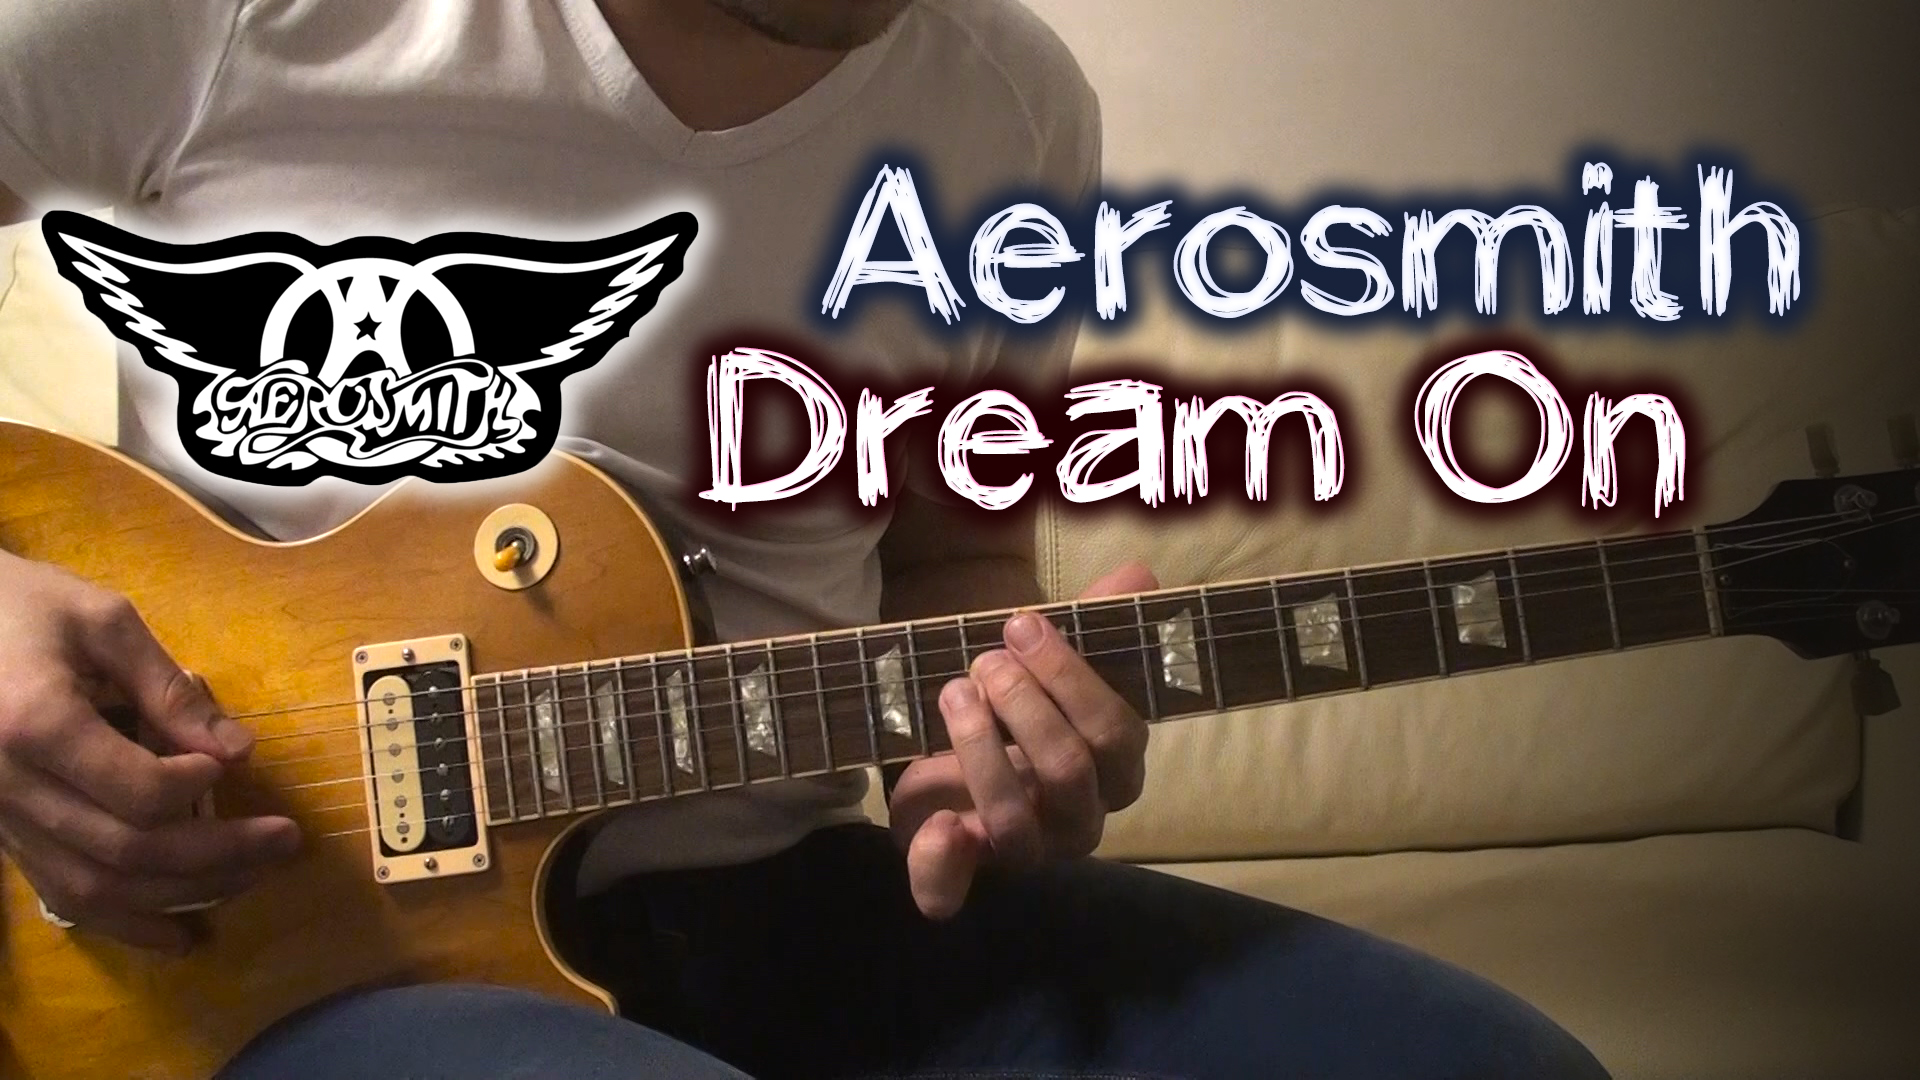 Aerosmith - Dream On (guitar cover). Студент Роман Кротов